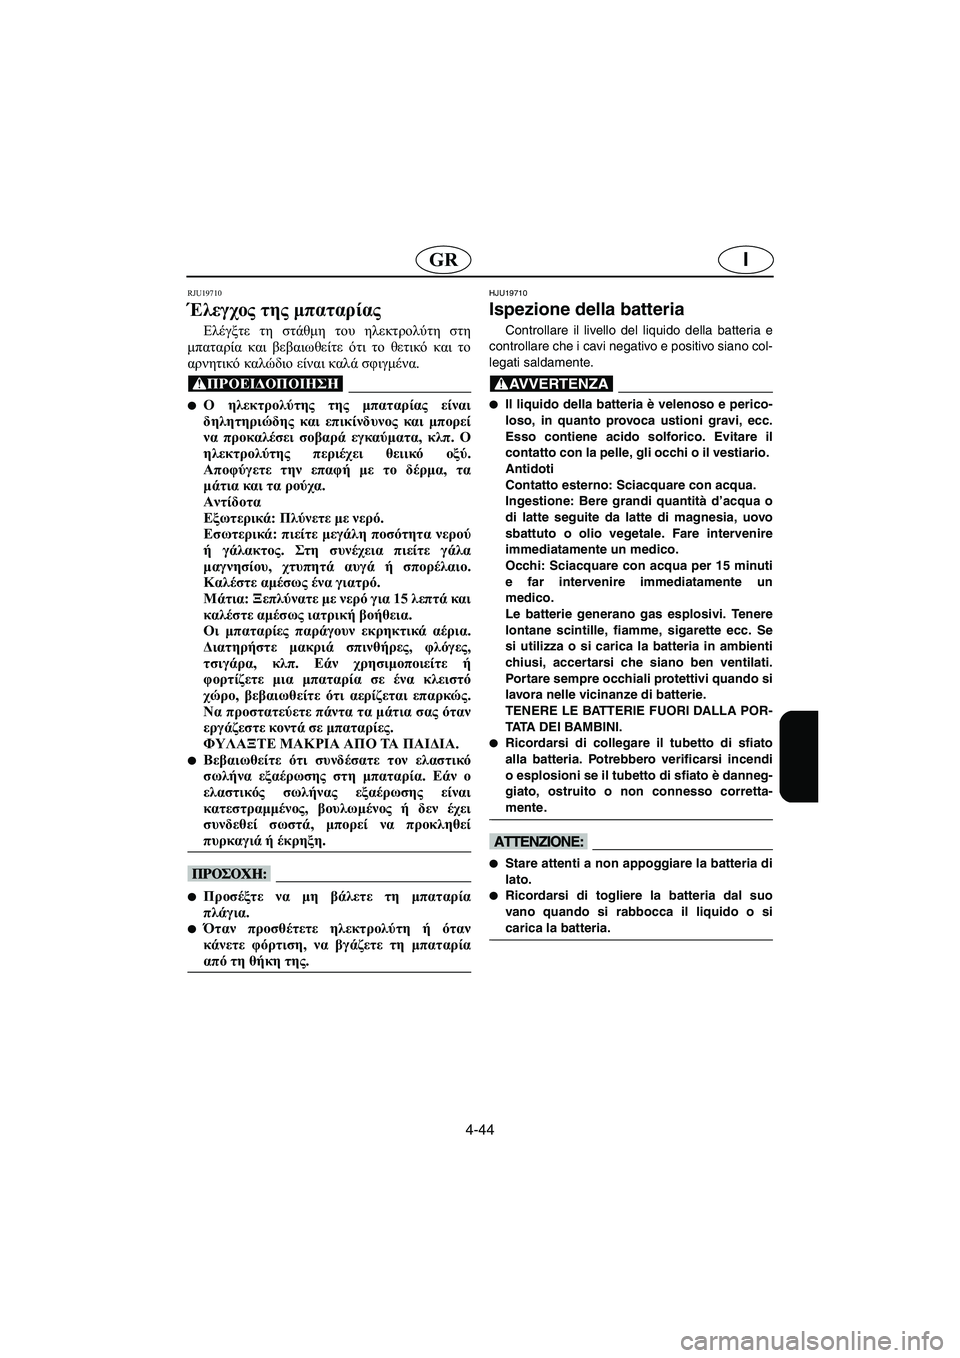 YAMAHA FX HO 2006  Manual de utilização (in Portuguese) 4-44
IGR
RJU19710 
Έλεγχος της μπαταρίας 
Ελέγξτε τη στάθμη του ηλεκτρολύτη στη
μπαταρία και βεβαιωθείτε ότι το θετικ